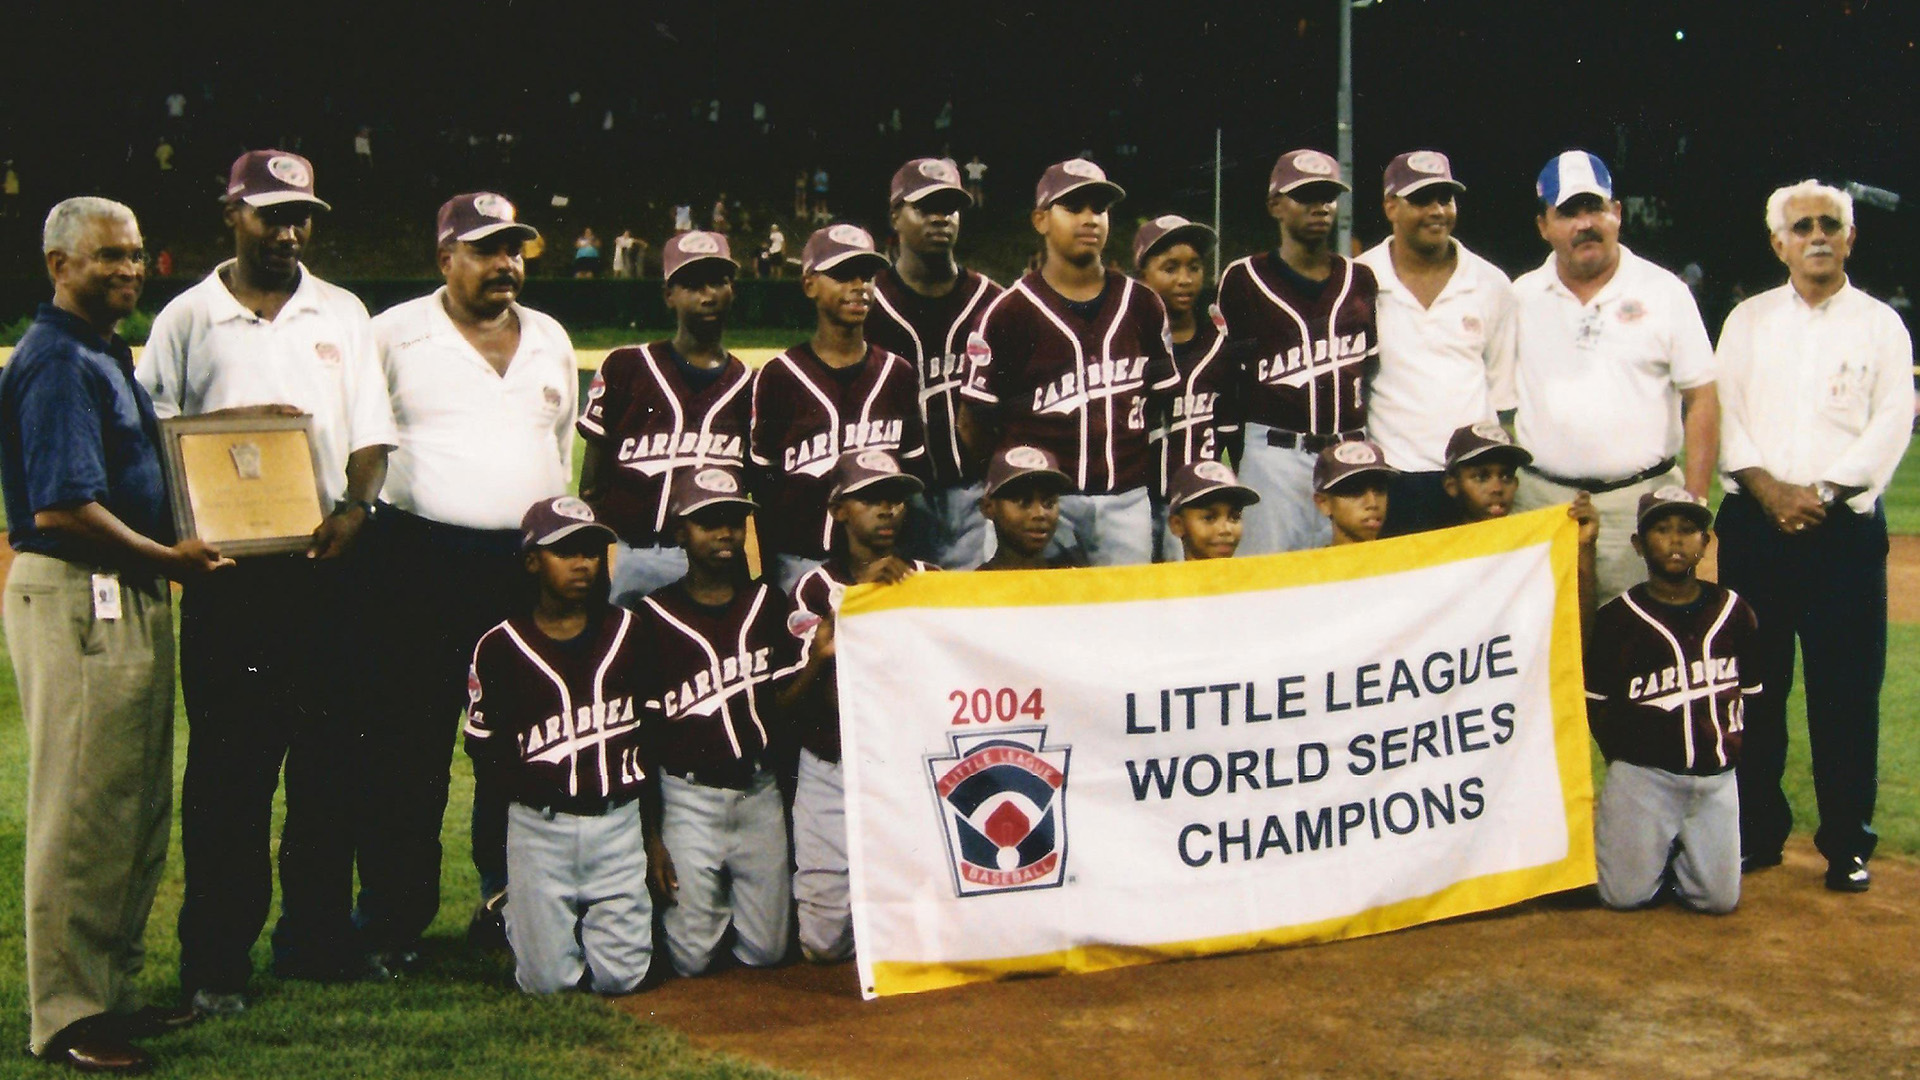 A group photo of the 2004 Curaçao Little League team